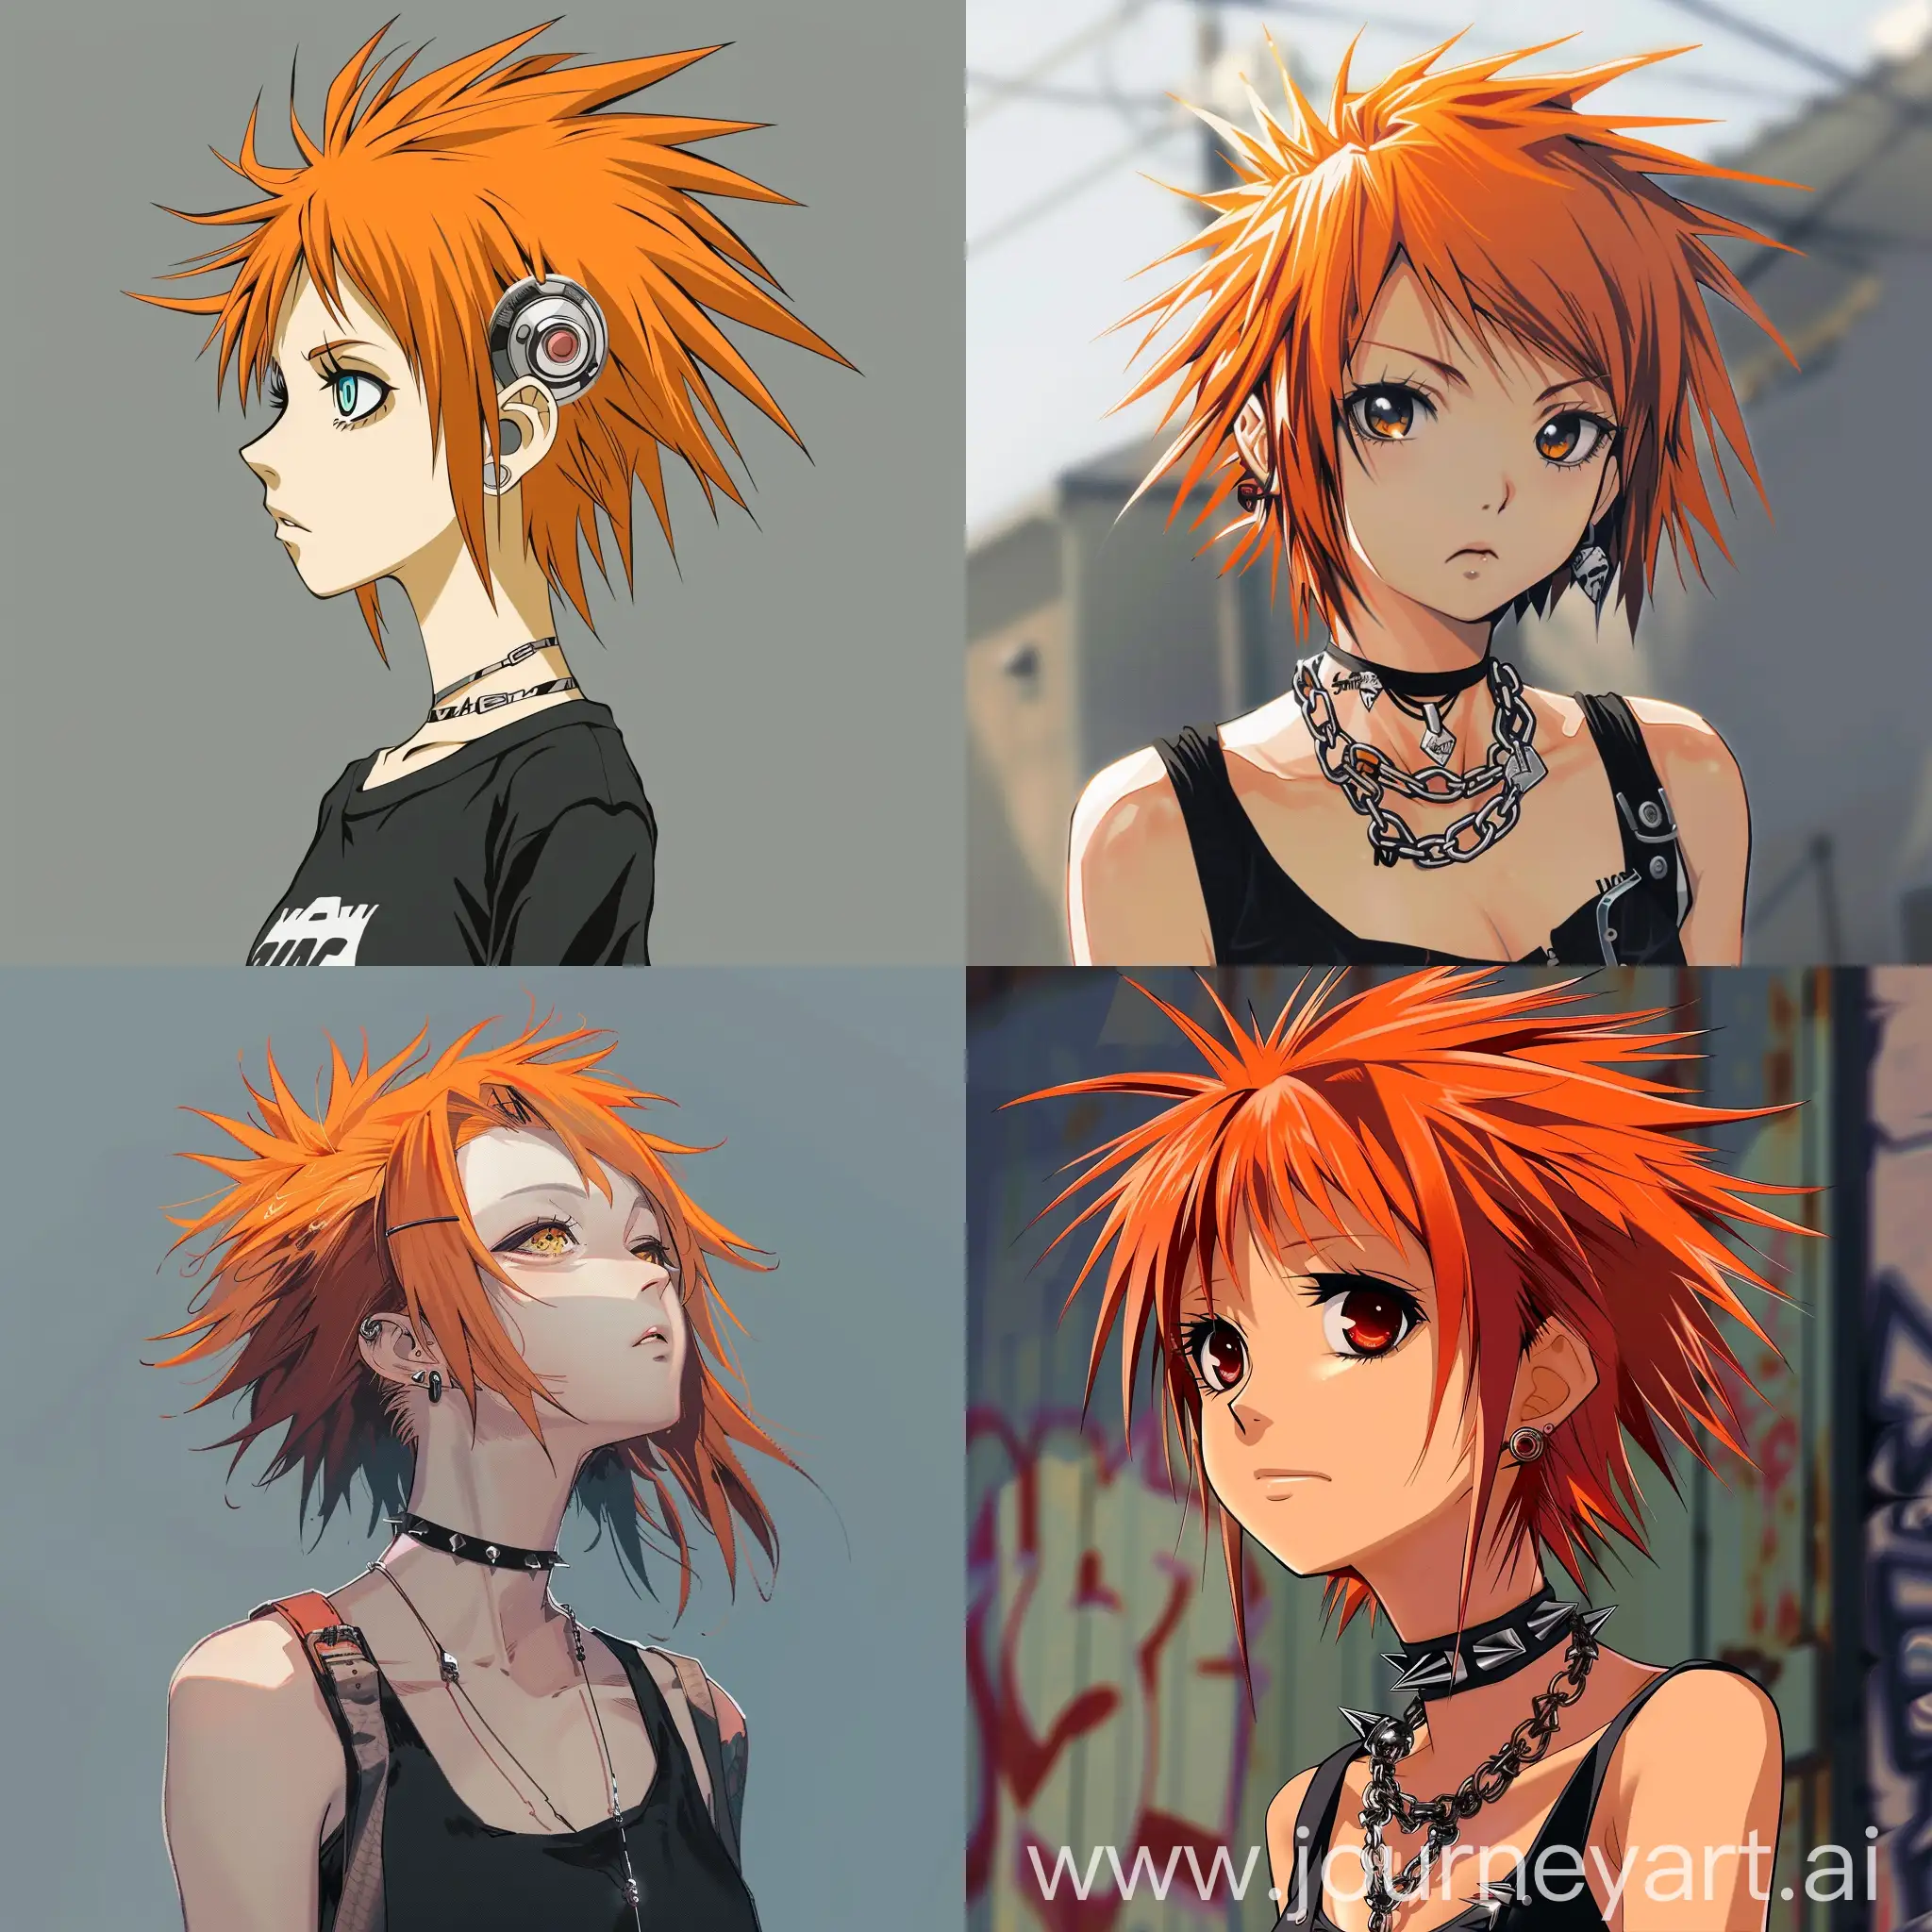 Energetic-Anime-Girl-with-Spiky-Orange-Hair